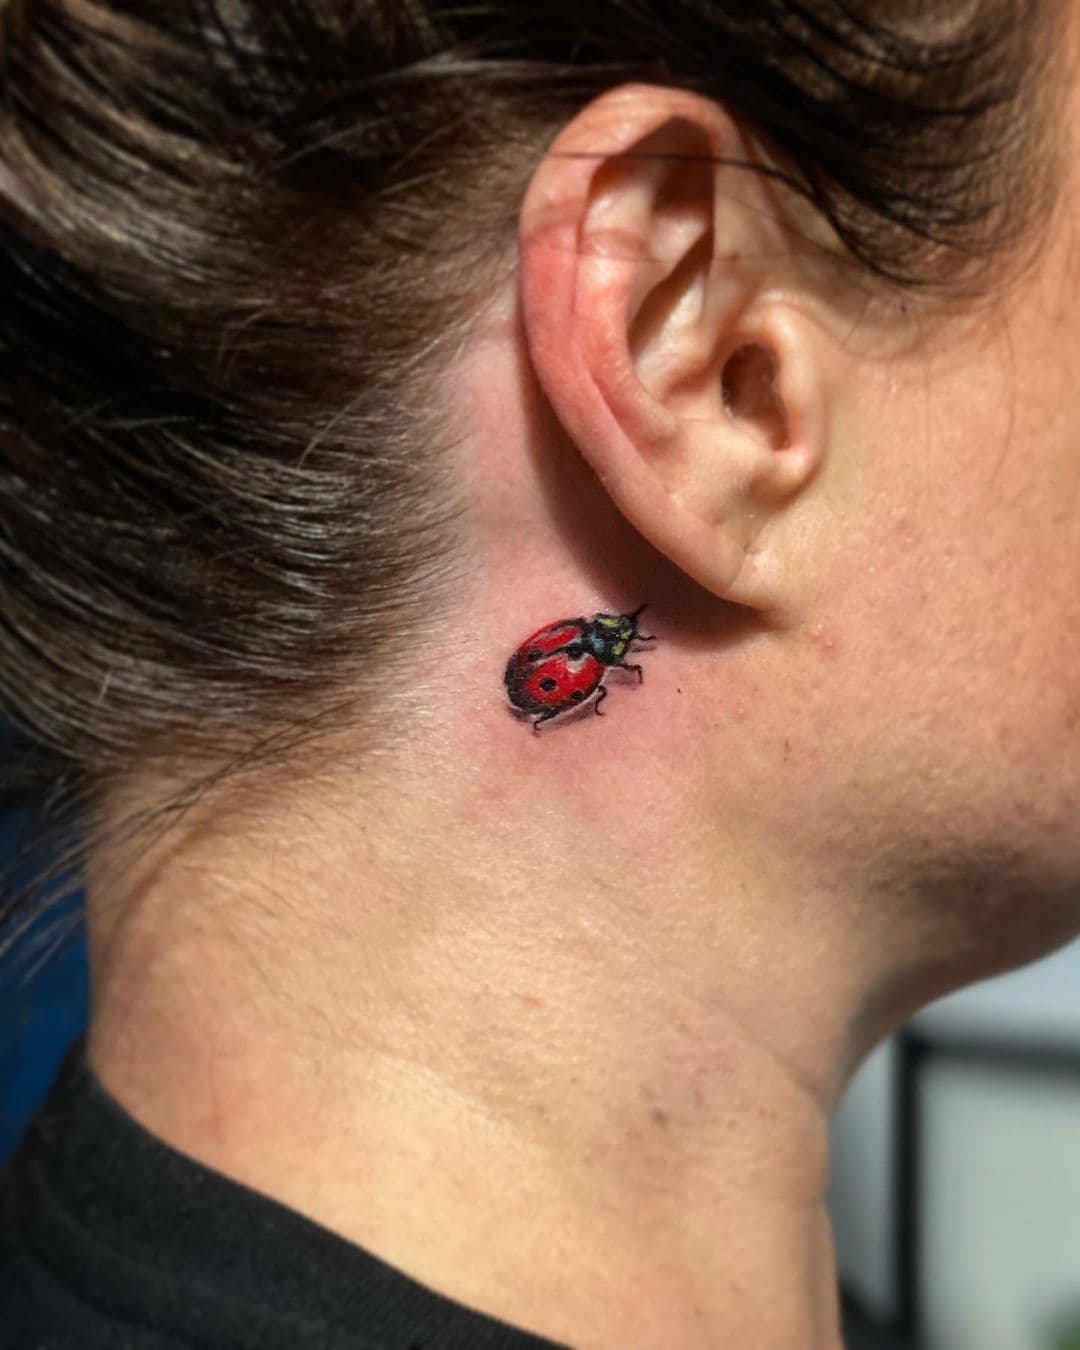 Ladybird behind the tattoo hero tattoo